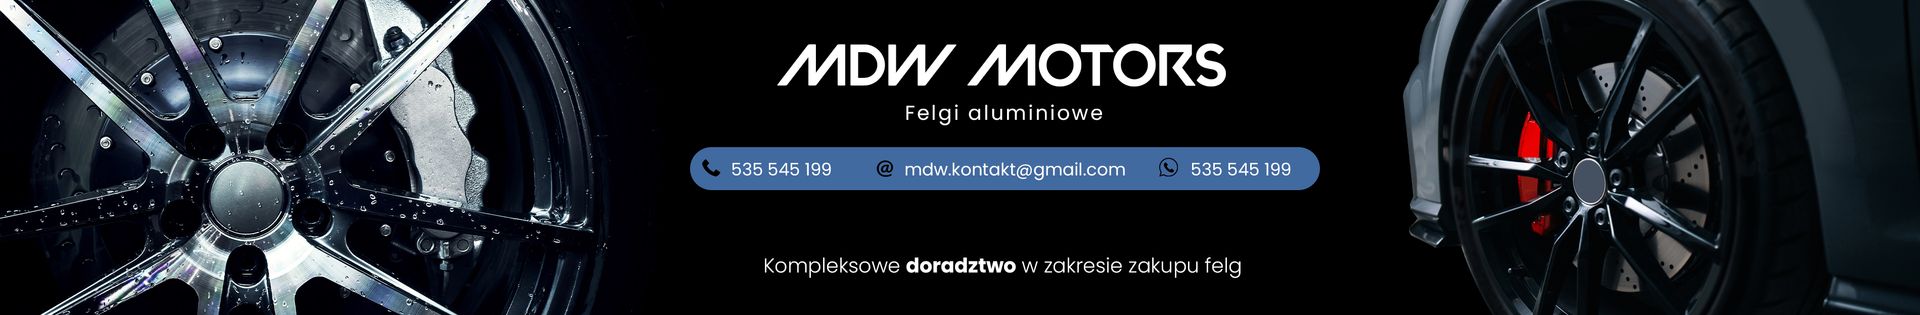 MDW MOTORS Mateusz Wąsik top banner